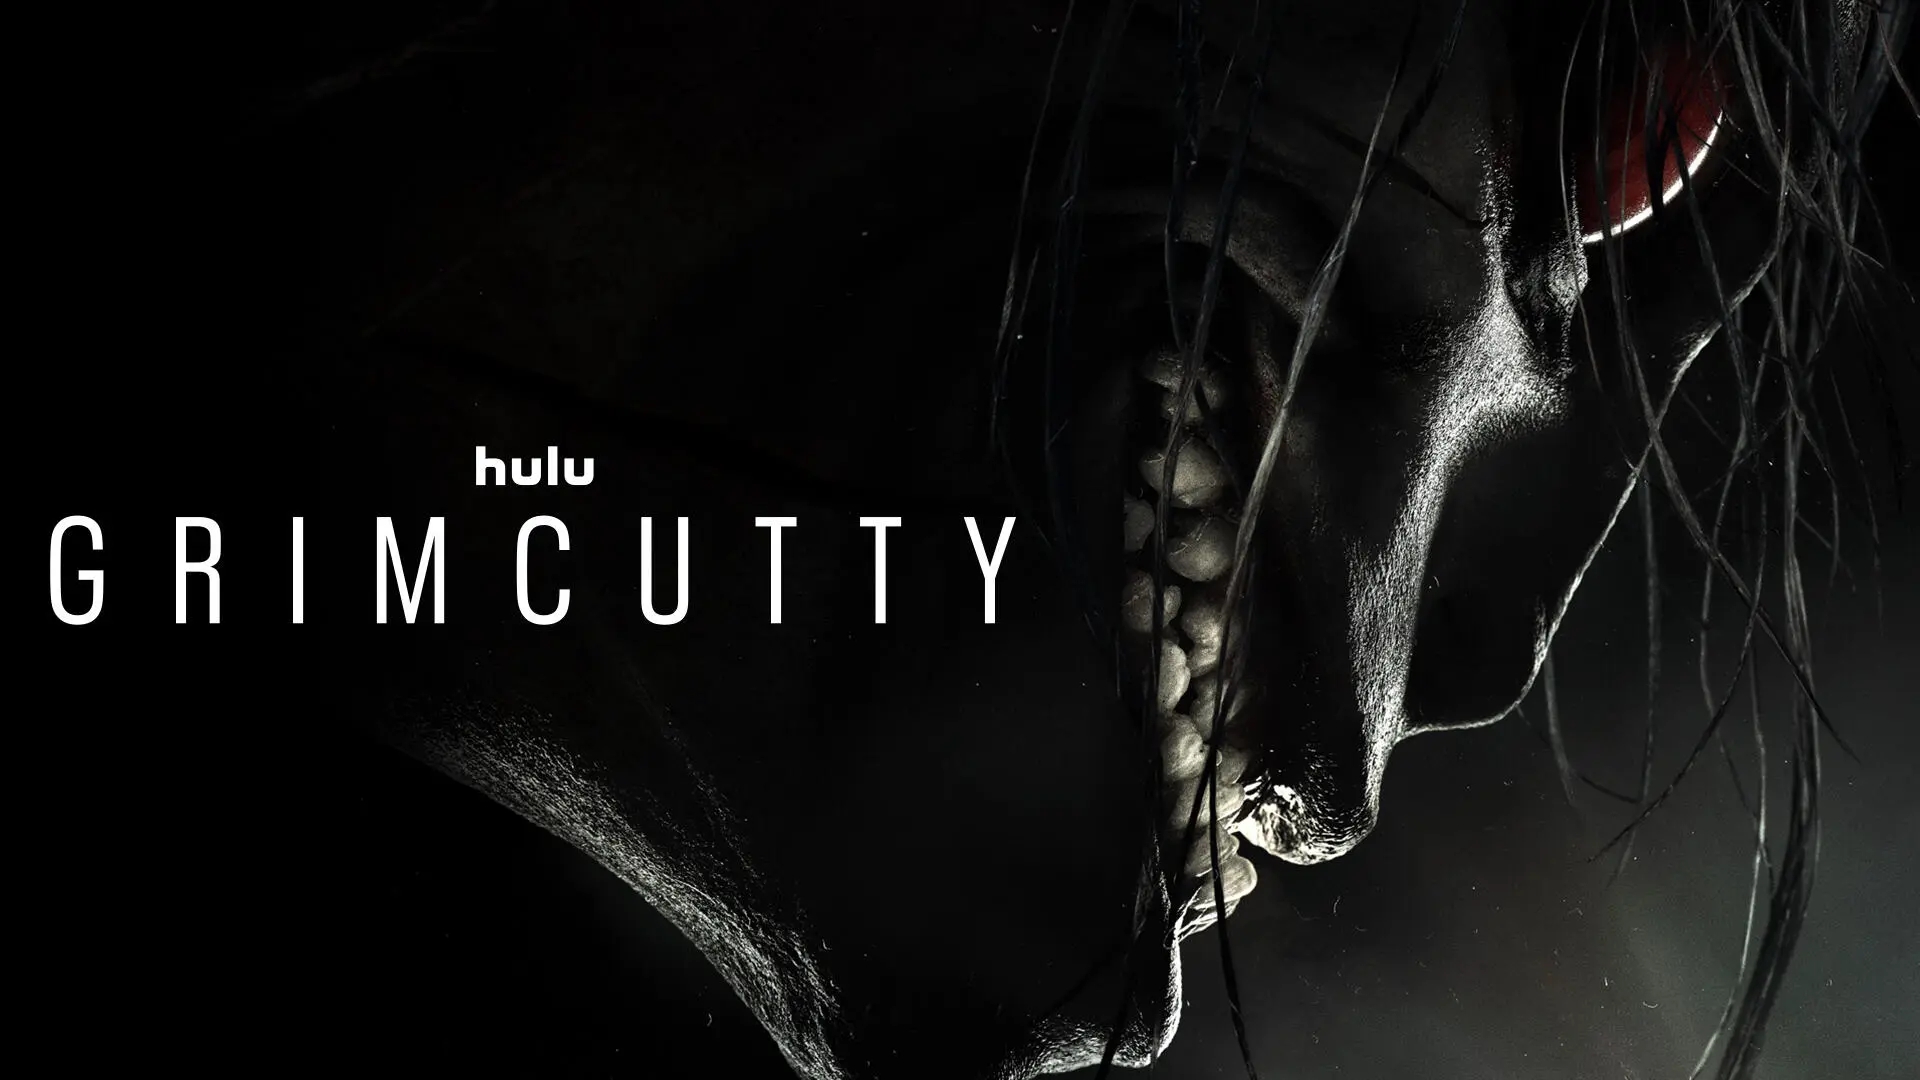 Title art for the Hulu original horror movie Grimcutty